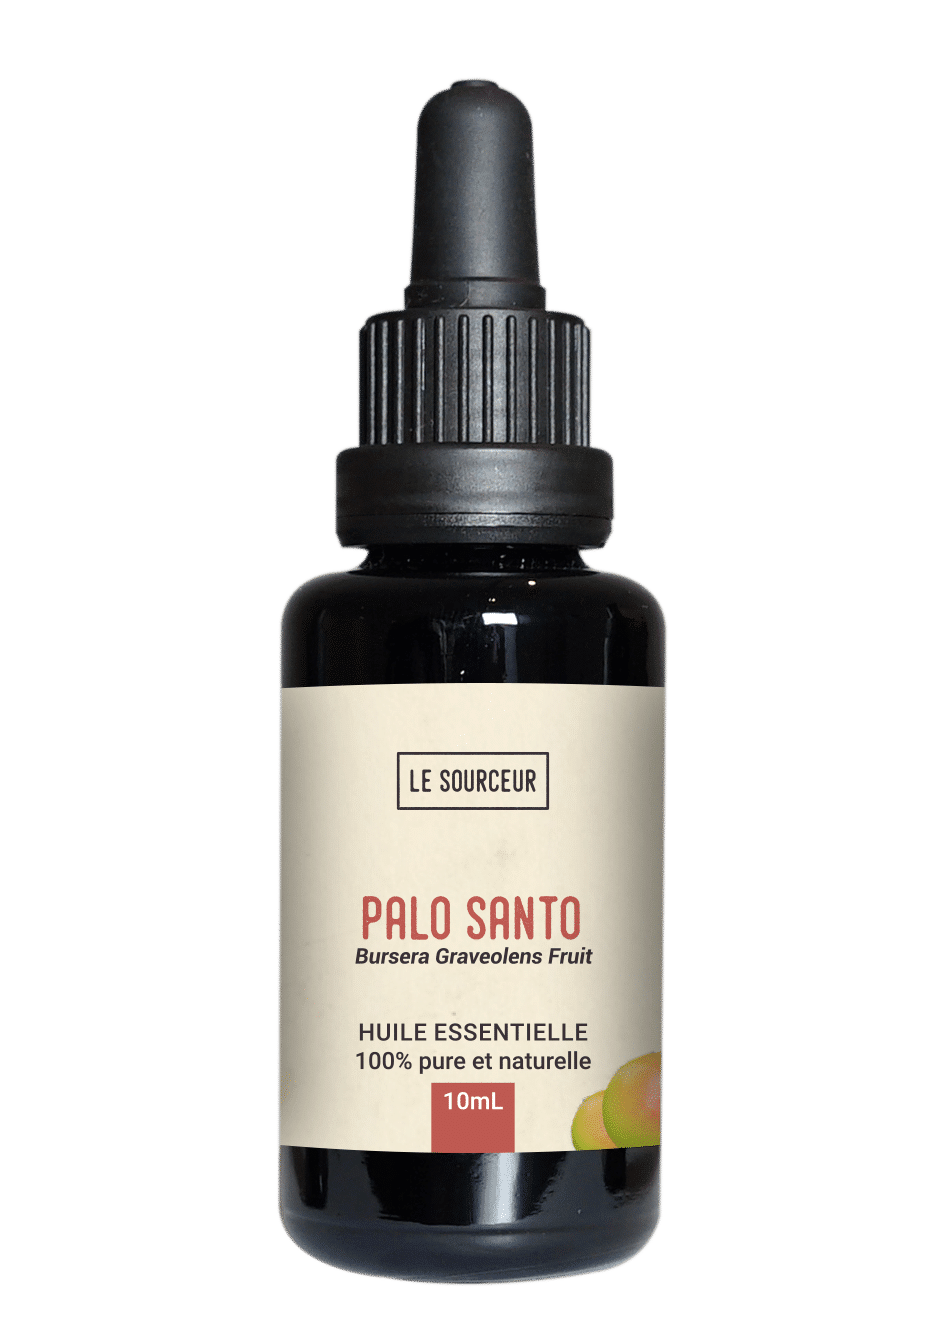 Bottle of Palo Santo essential oil